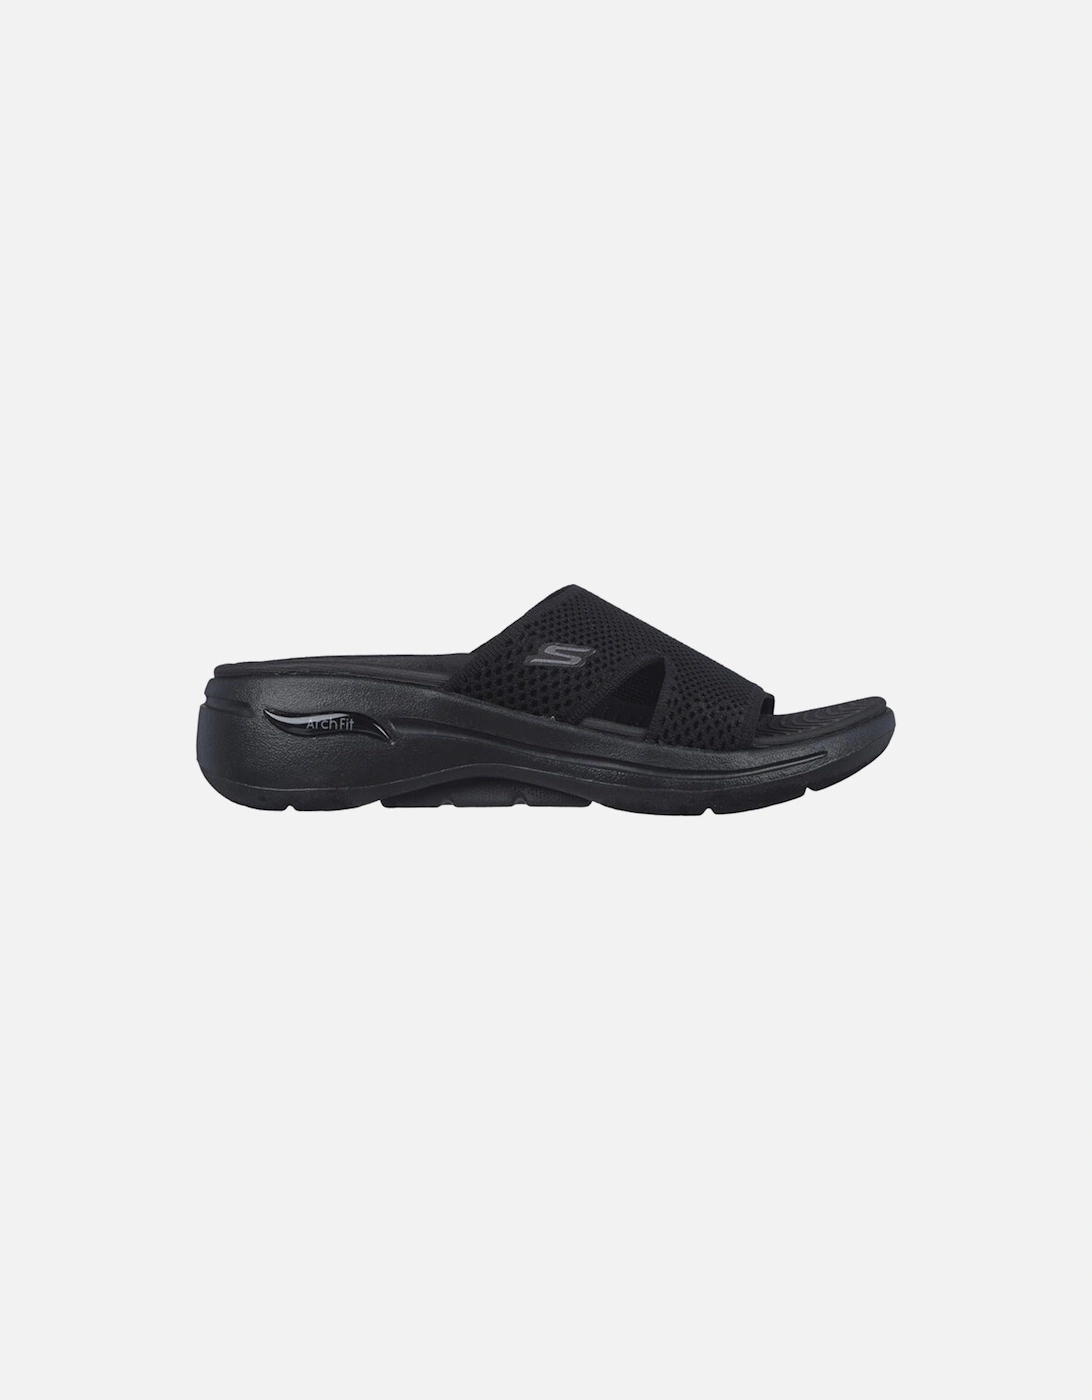 Skechers Womens Go Walk Arch Fit Sandals (Black), 5 of 4